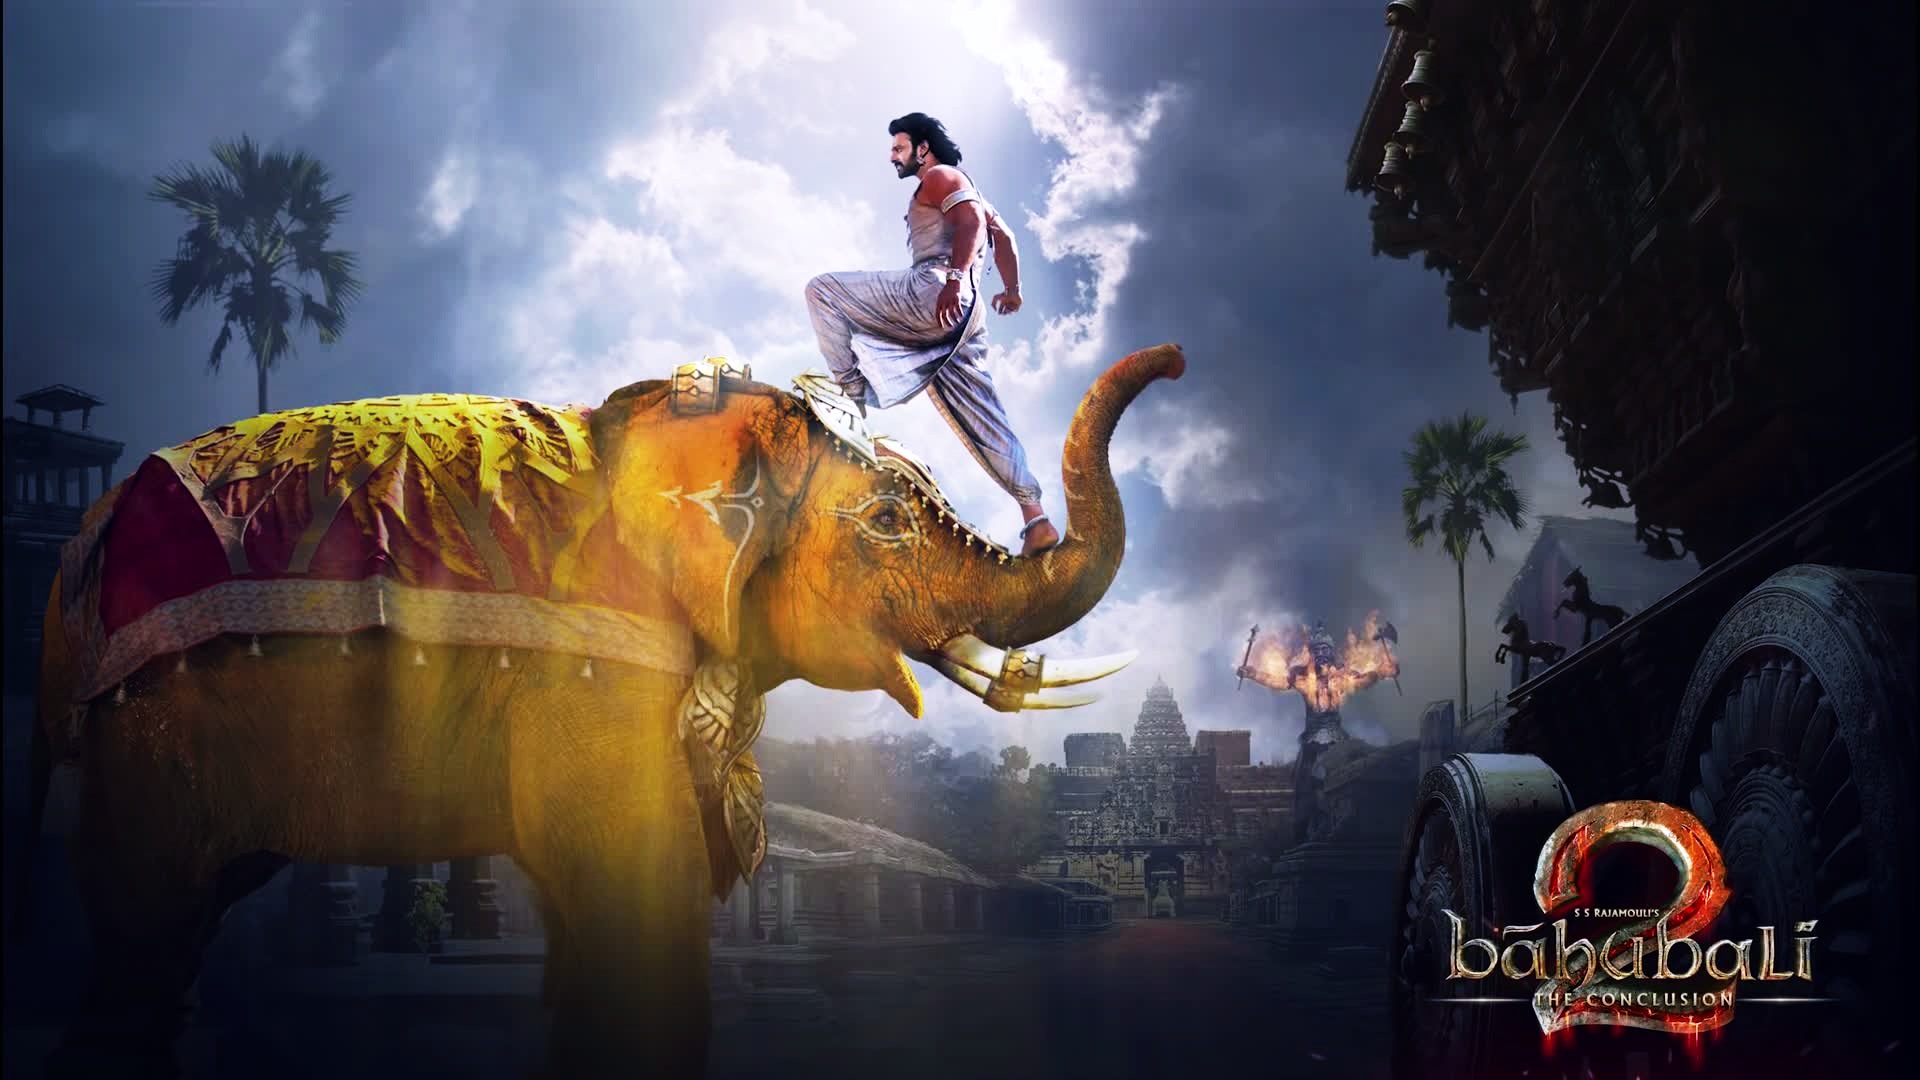 baahubali 2: the conclusion, movie, elephant